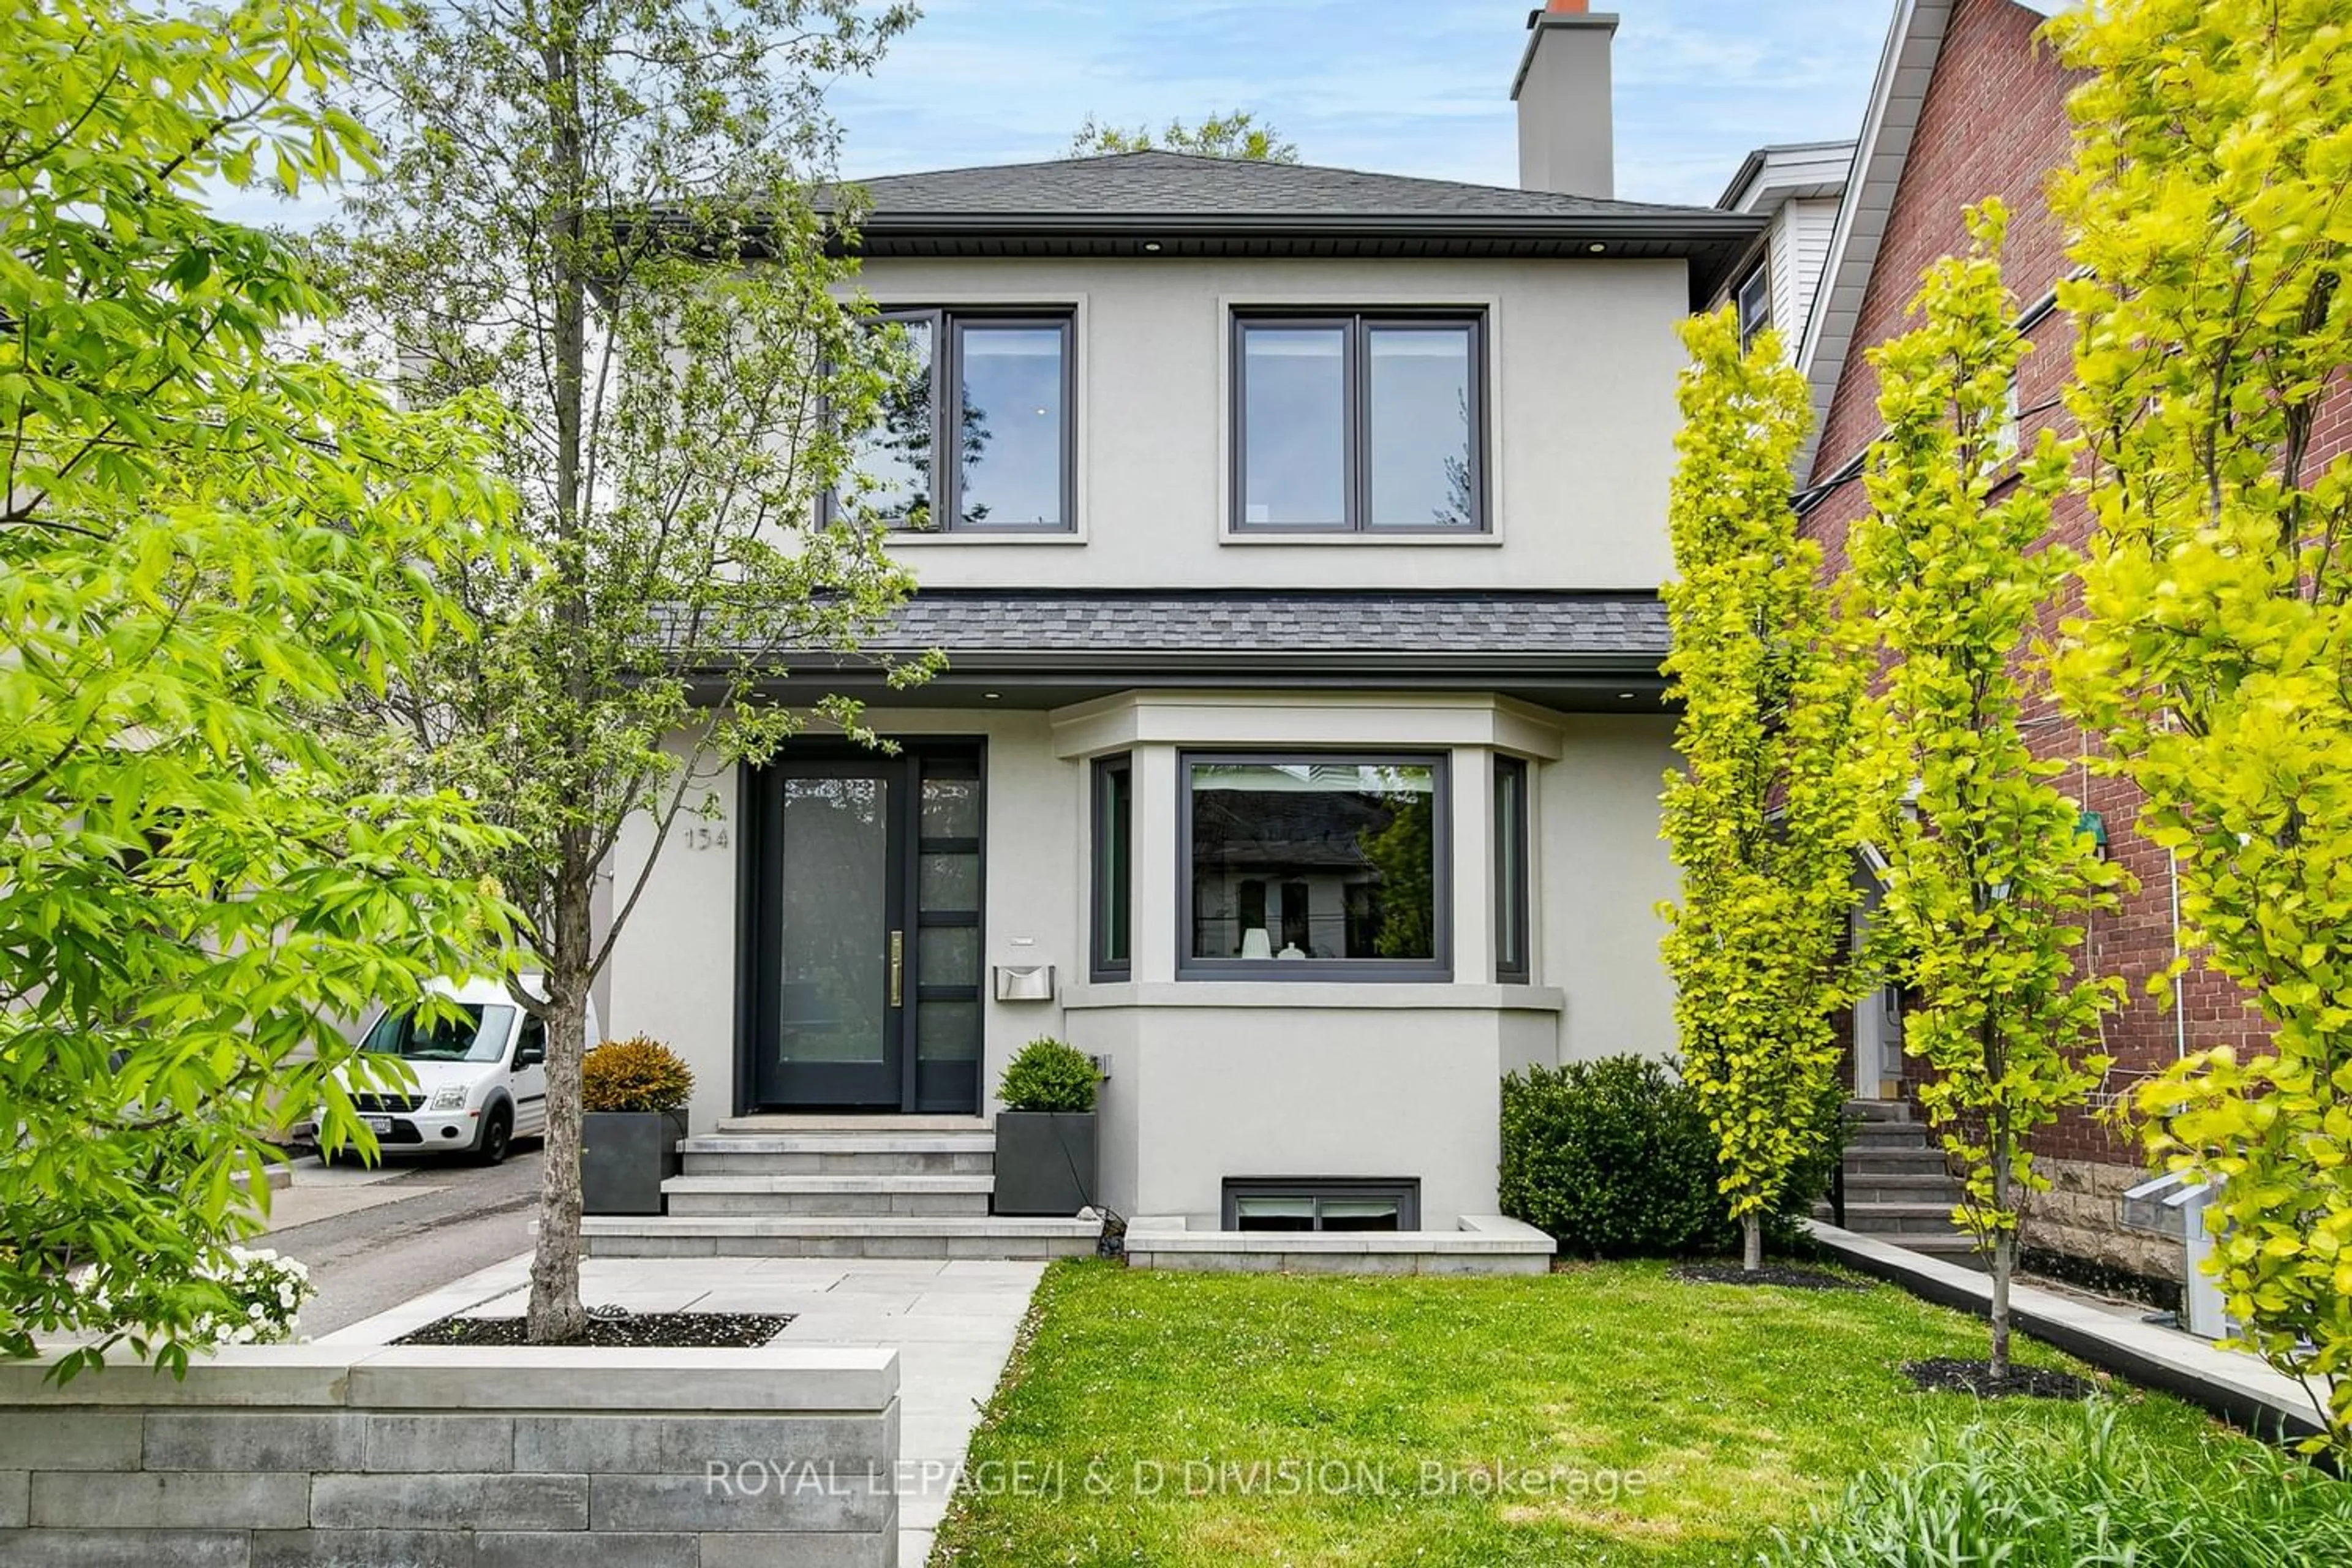 Home with brick exterior material for 154 Highbourne Rd, Toronto Ontario M5P 2J7